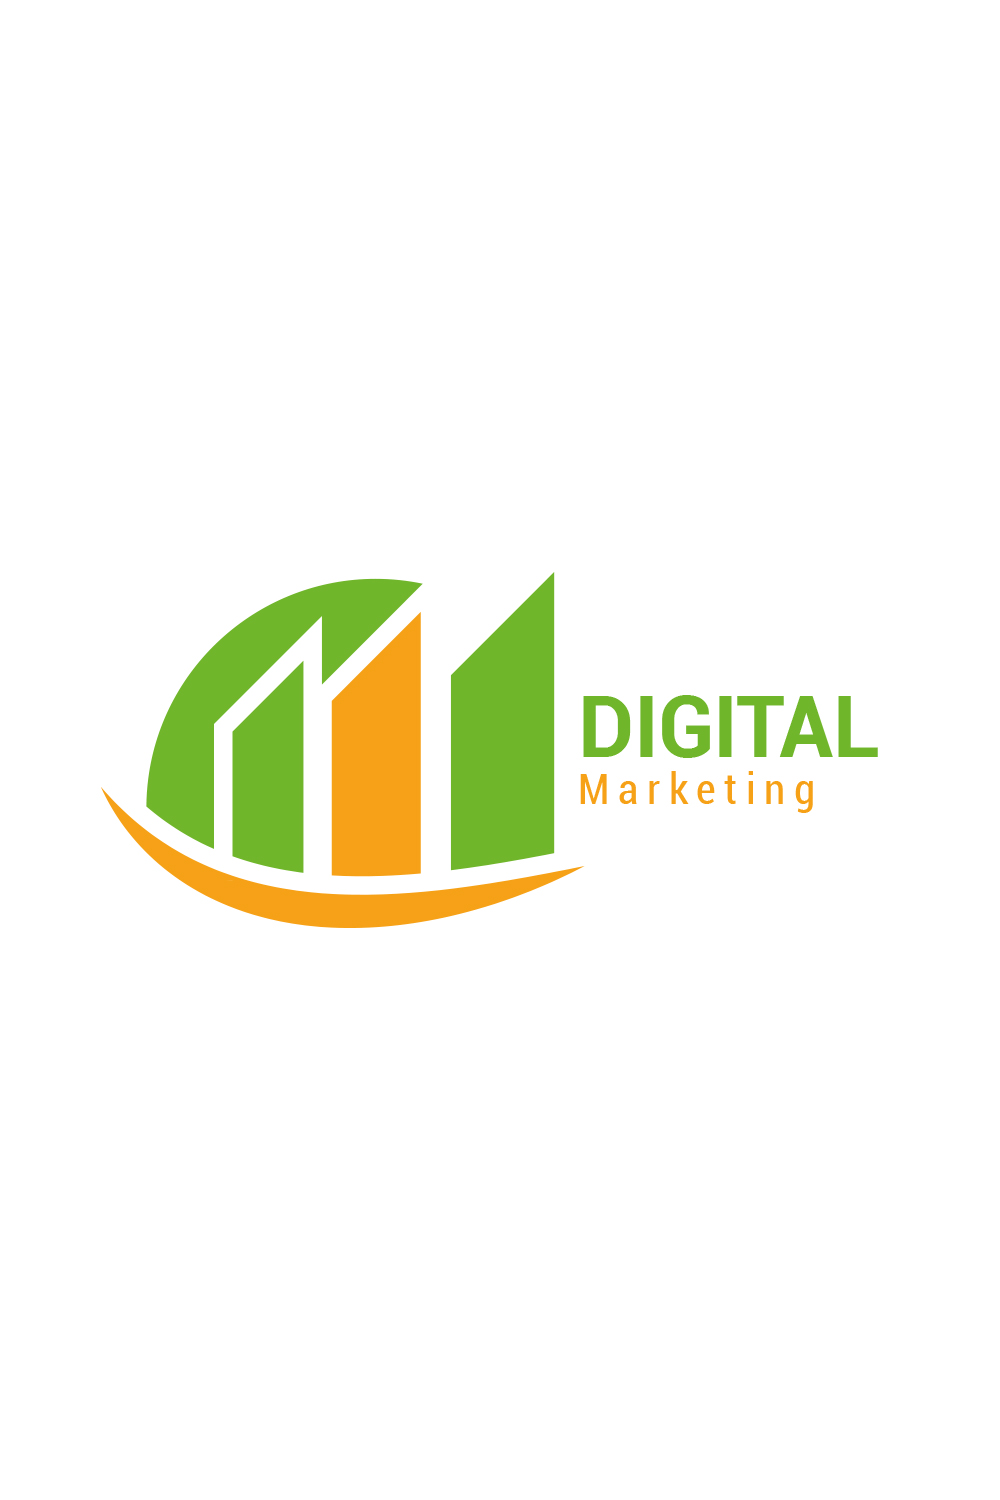 Digital marketing logo design ( txt is easily editable ) pinterest preview image.